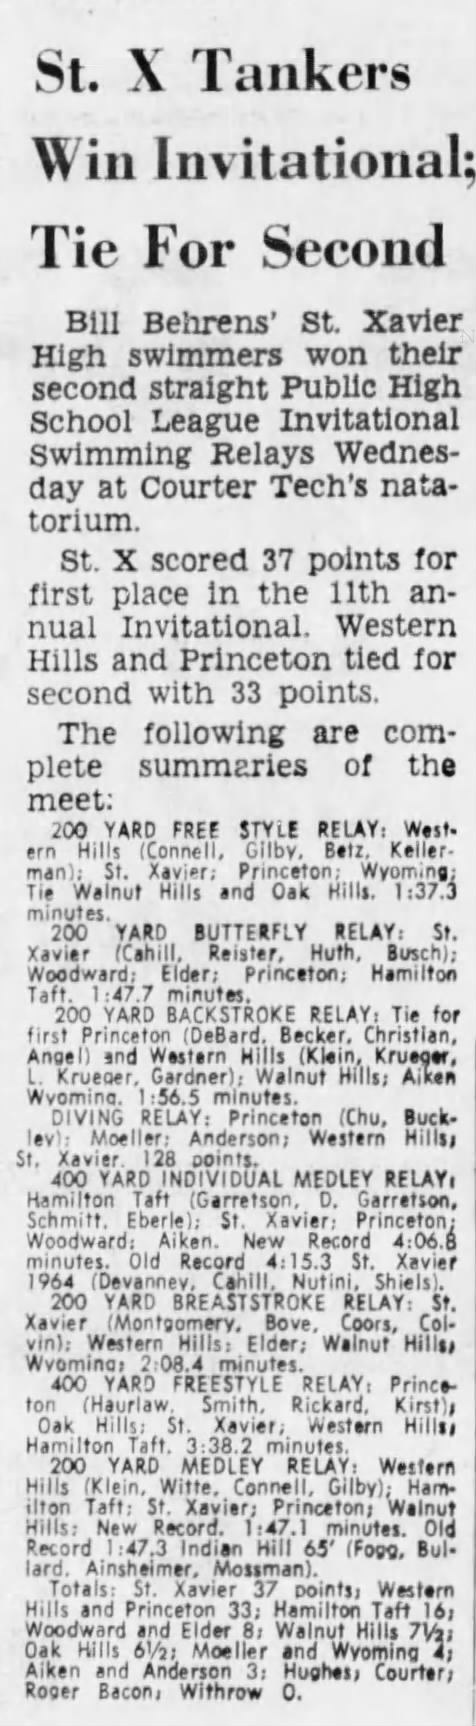 15 Dec 1966 - St X swim team wins the Public High School Relays at Courter Tech